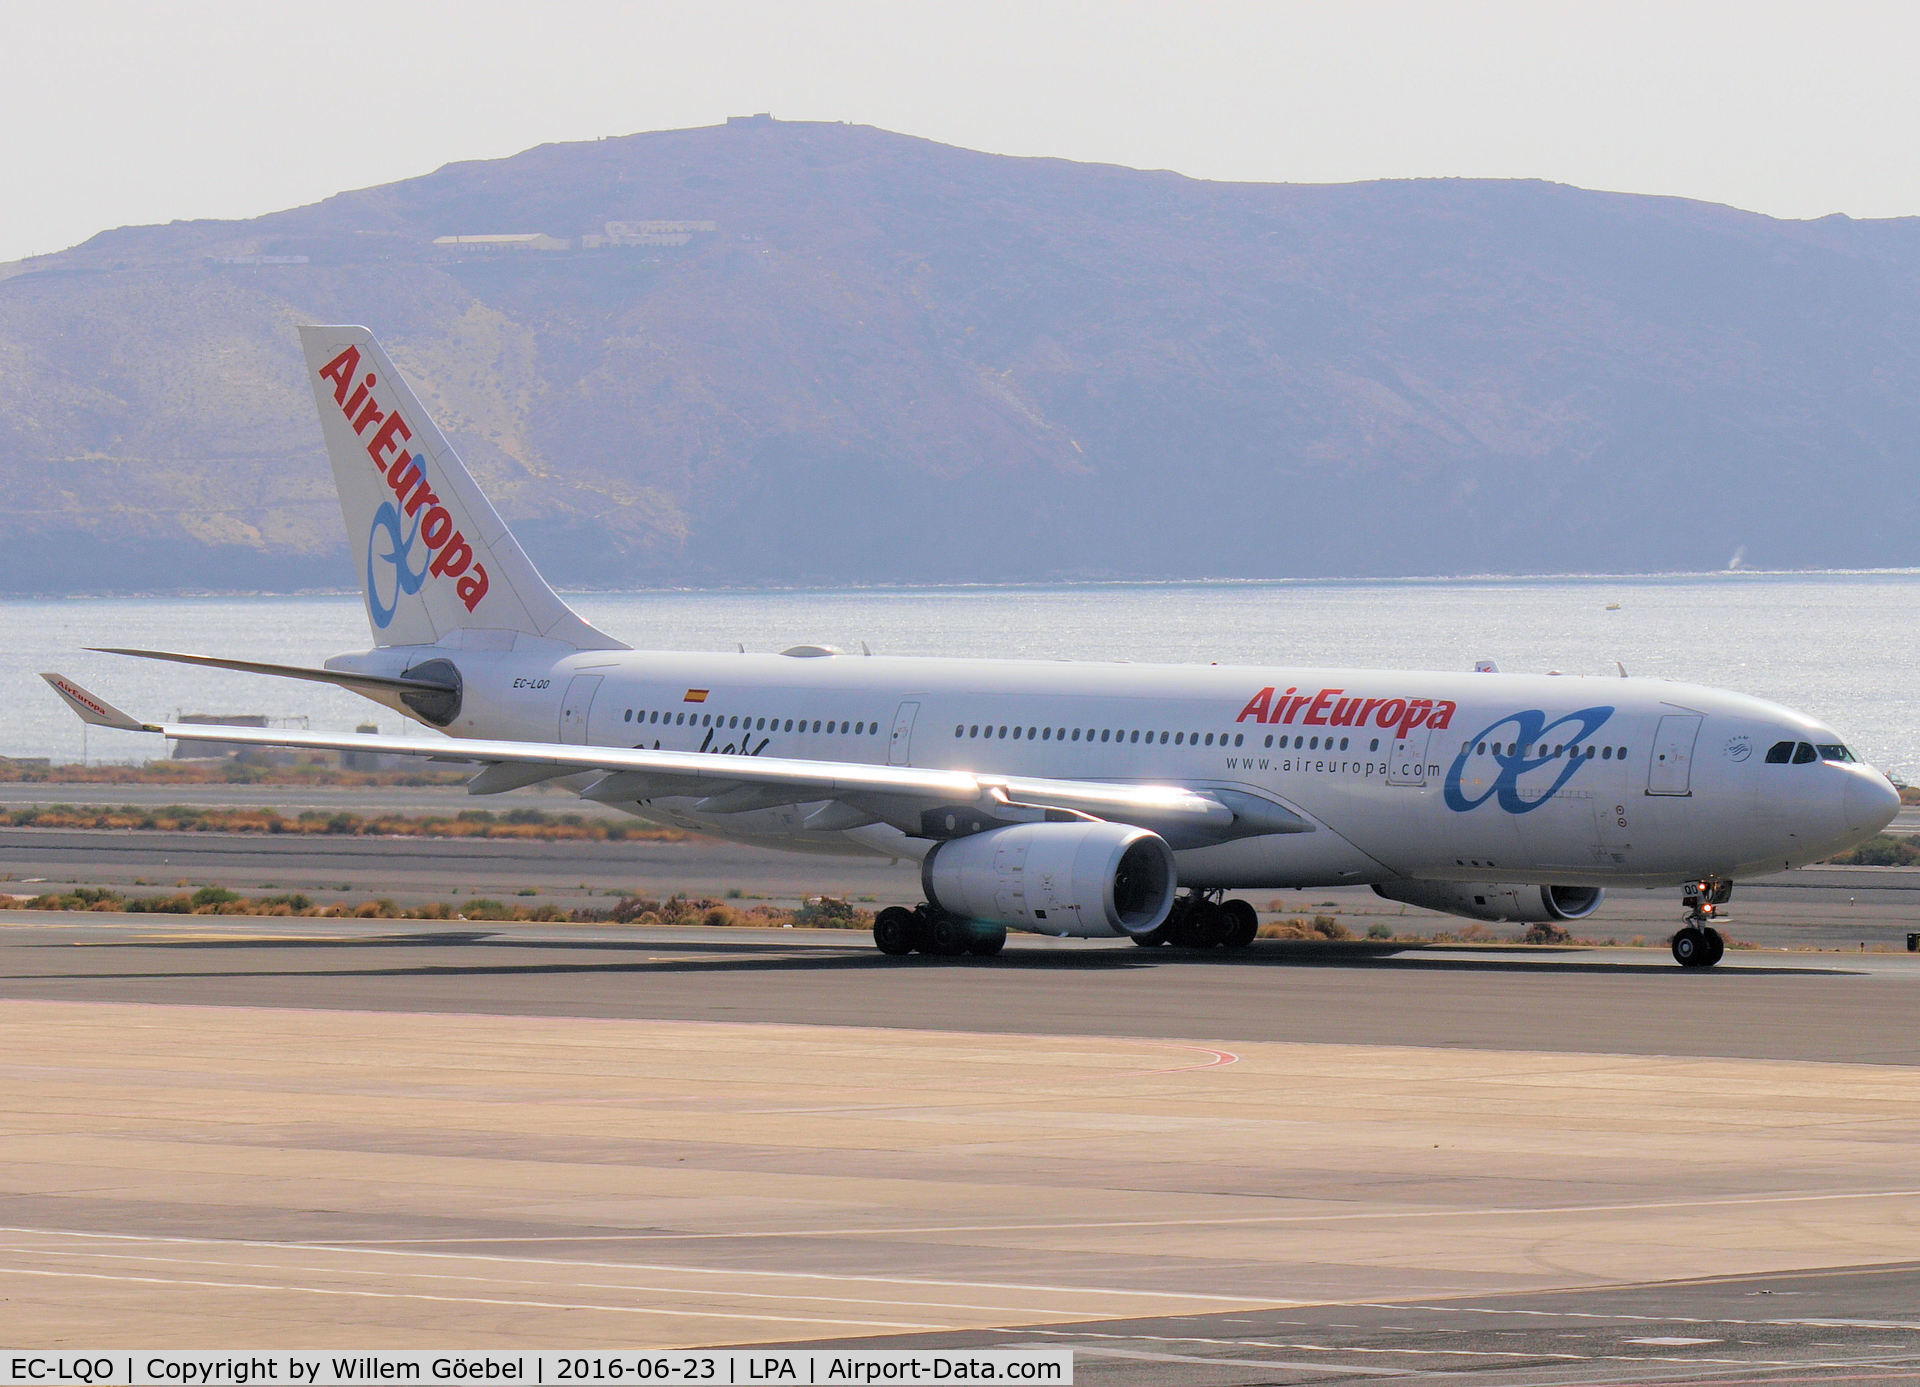 EC-LQO, 2002 Airbus A330-243 C/N 505, Taxi to the runway of Las Palmas Airport